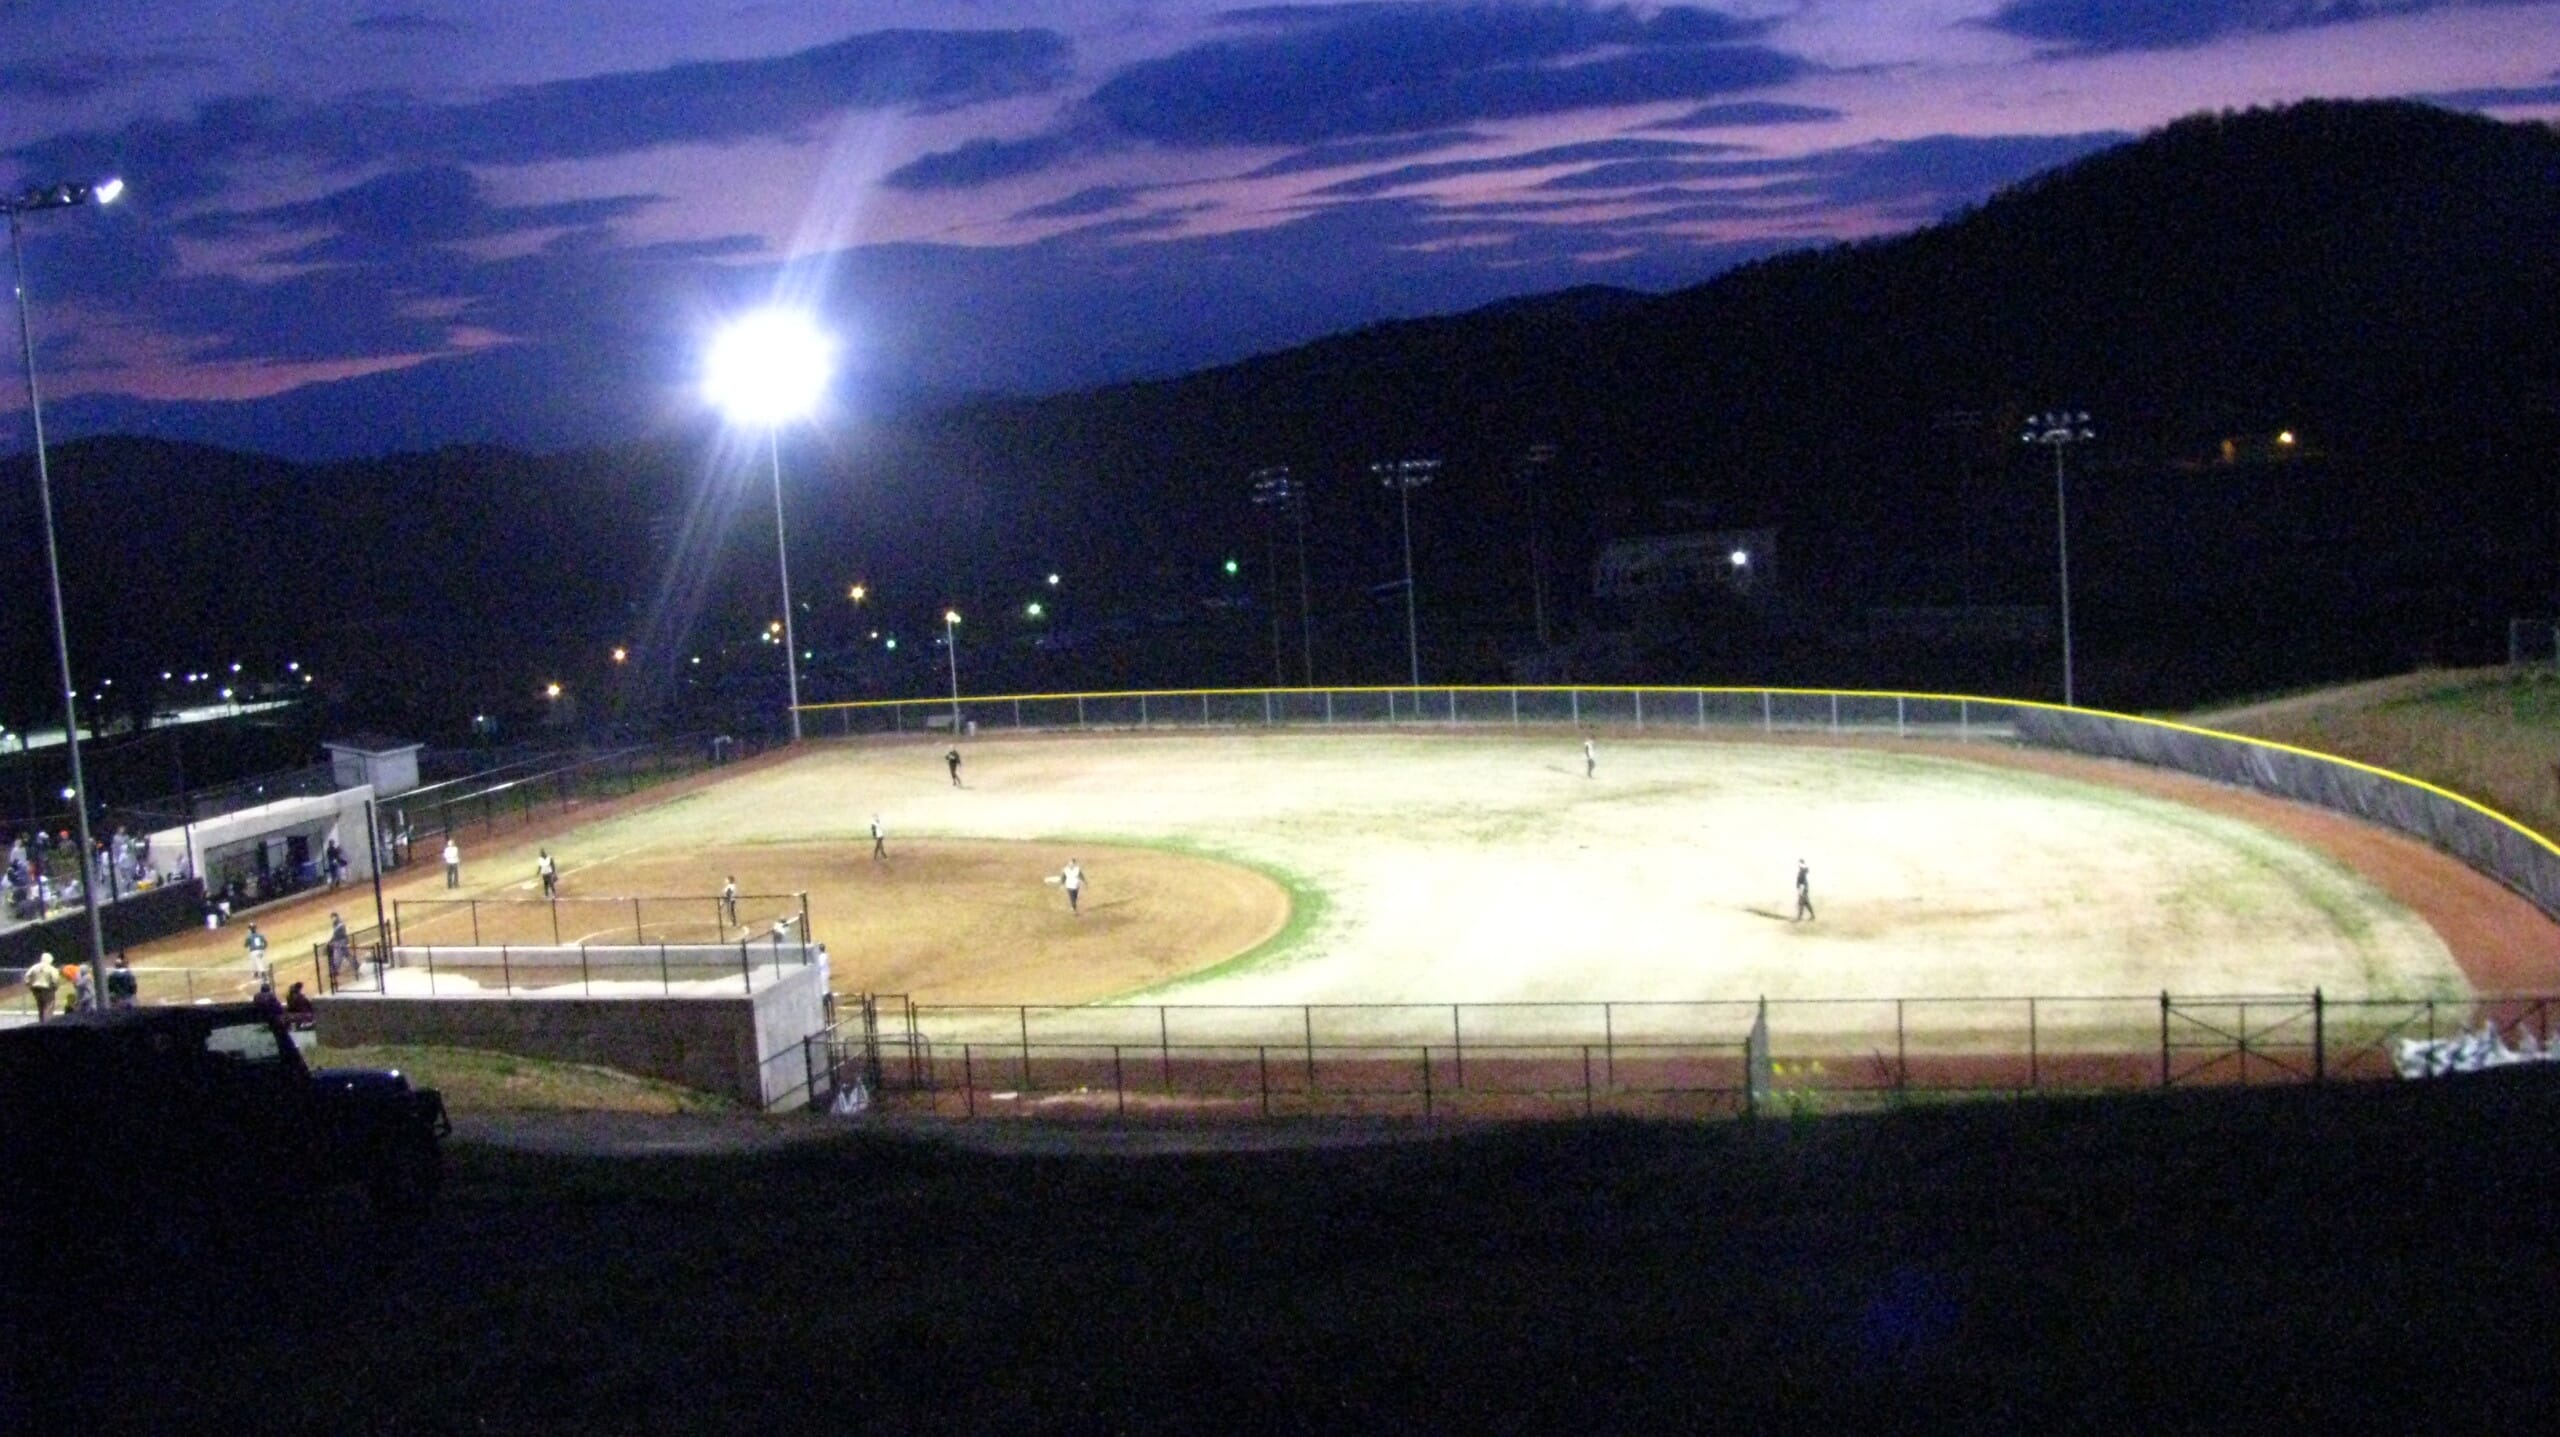 Night softball game at Ferrum College